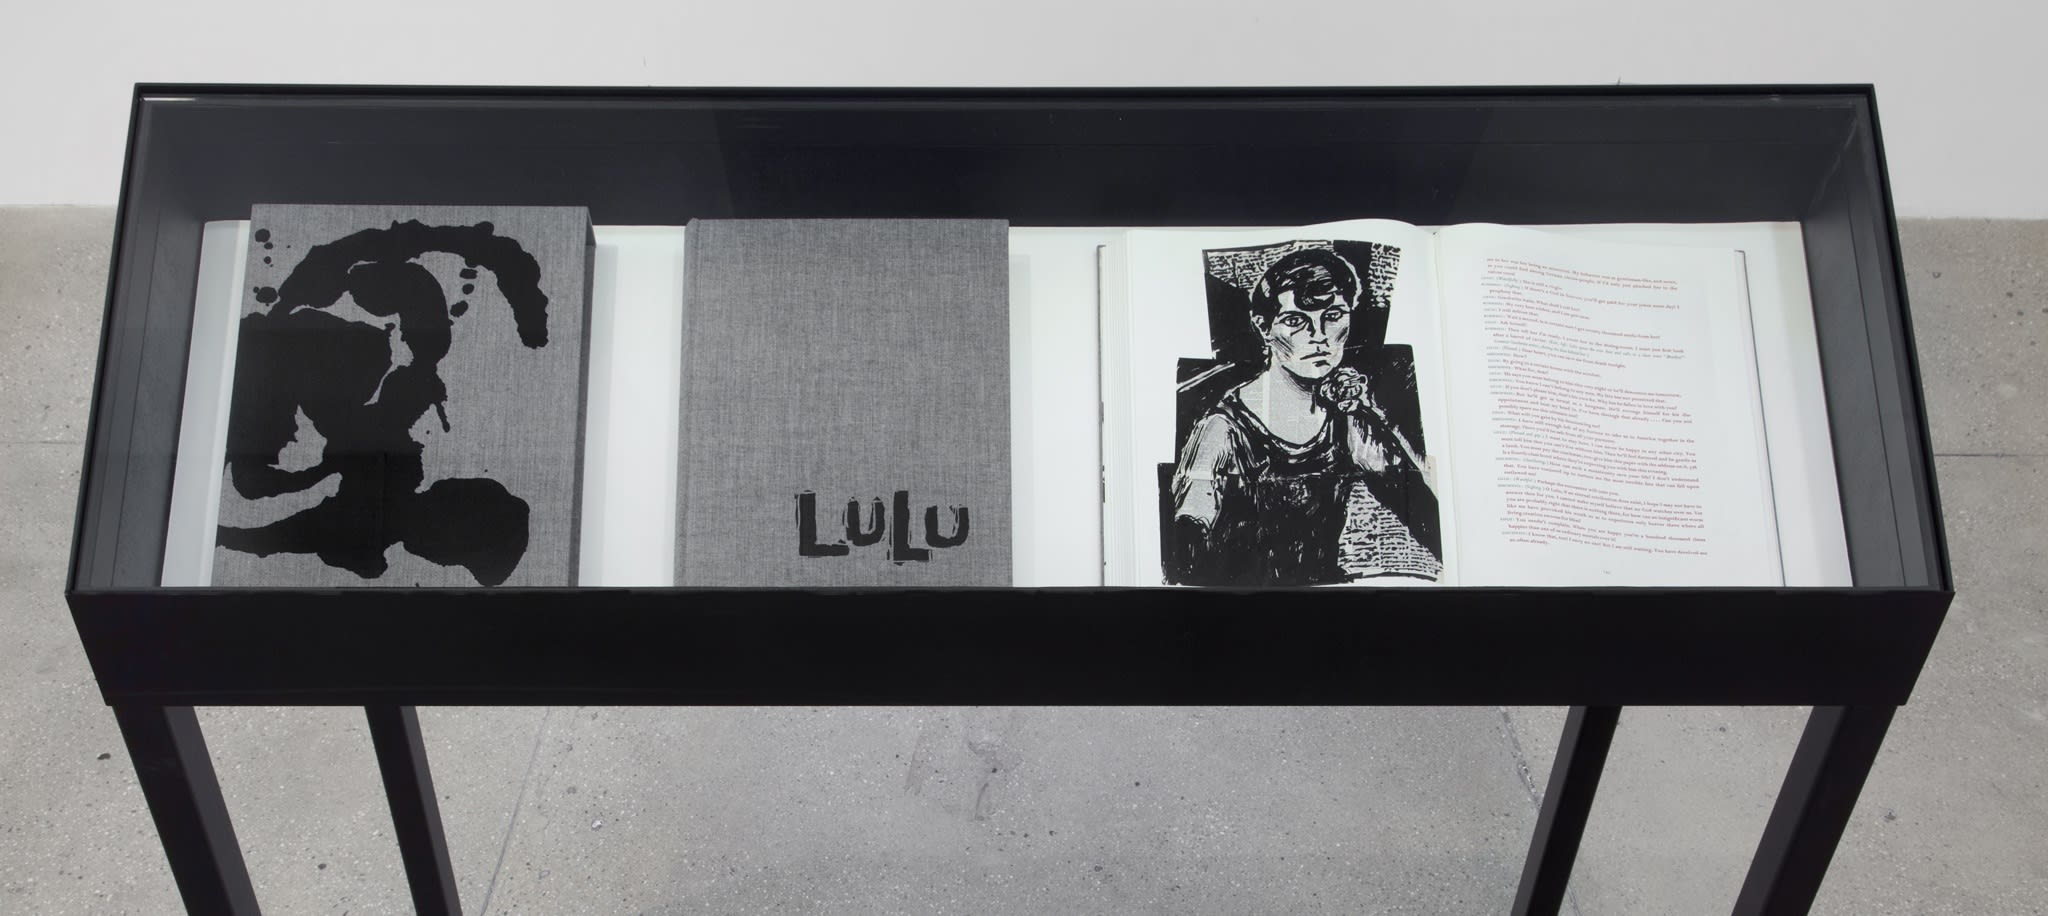 William Kentridge Drawings for 'Lulu'